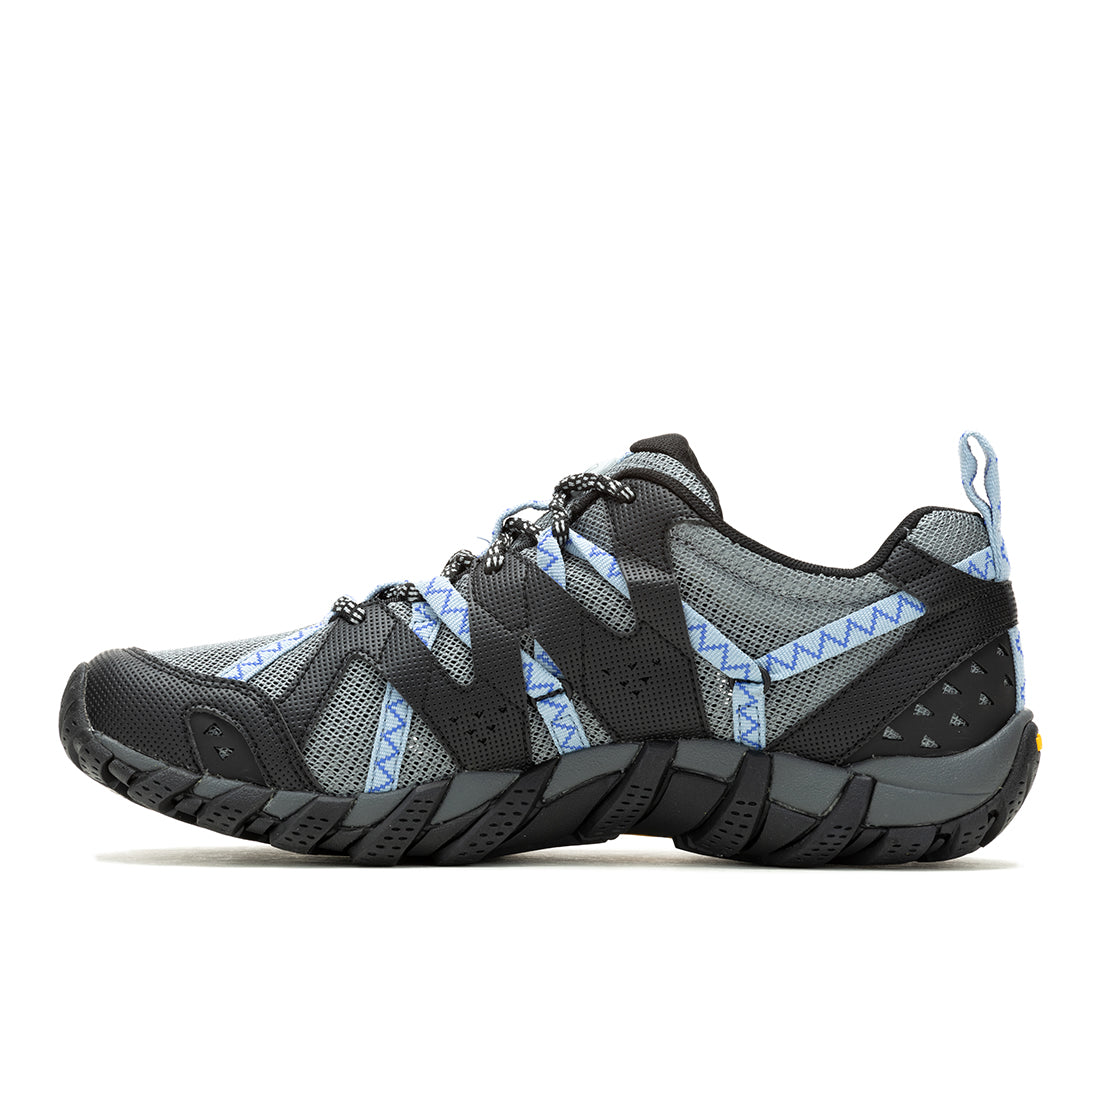 Waterpro Maipo 2 - Black/Chambray Mens Hydro Hiking Shoes